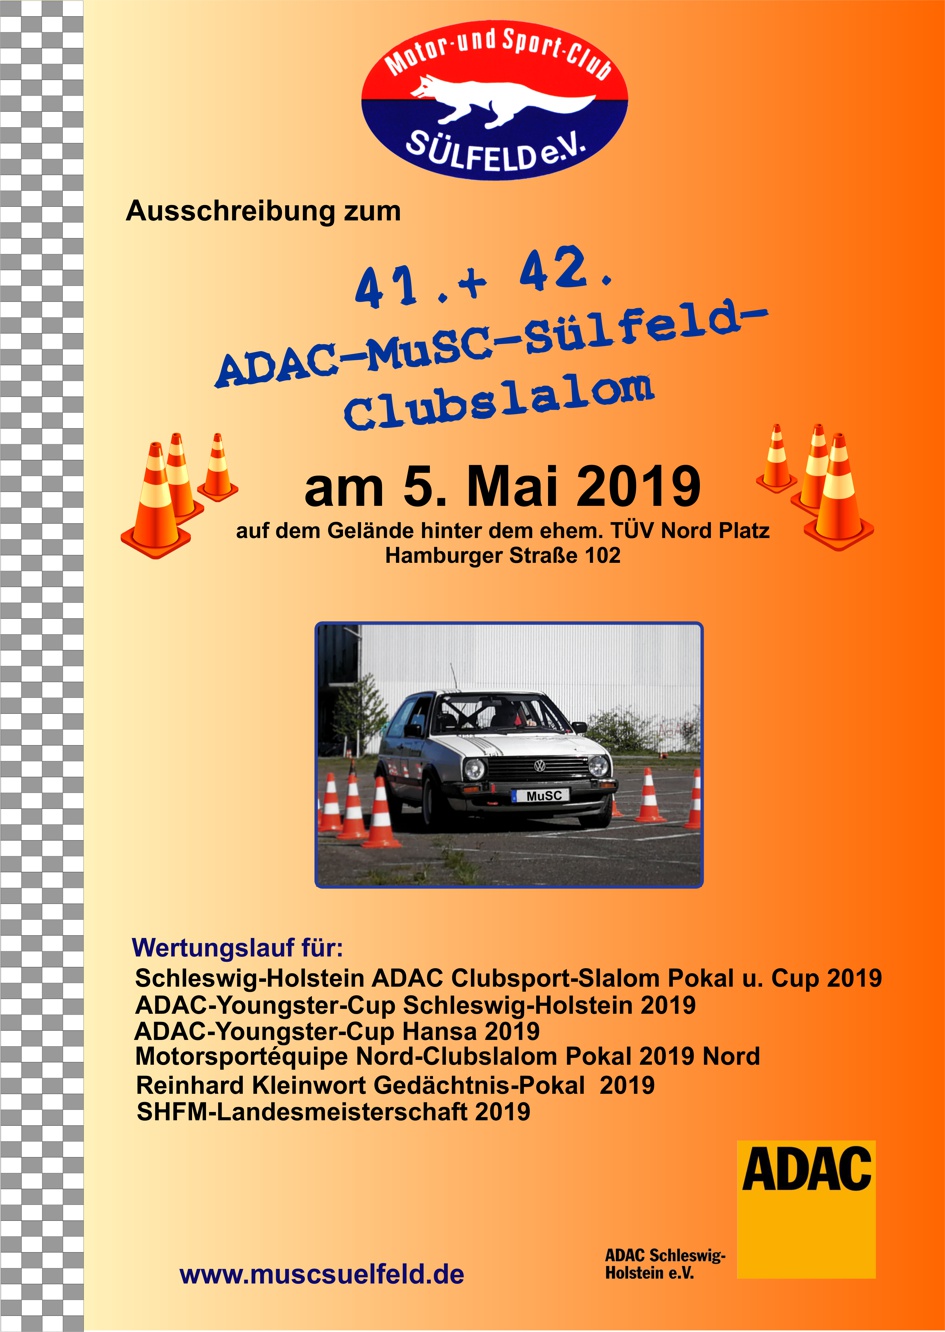 Am 6. Mai 2019 findet unser 40. und 42. ADAC-MuSC-Sülfeld-Clubslalom statt.